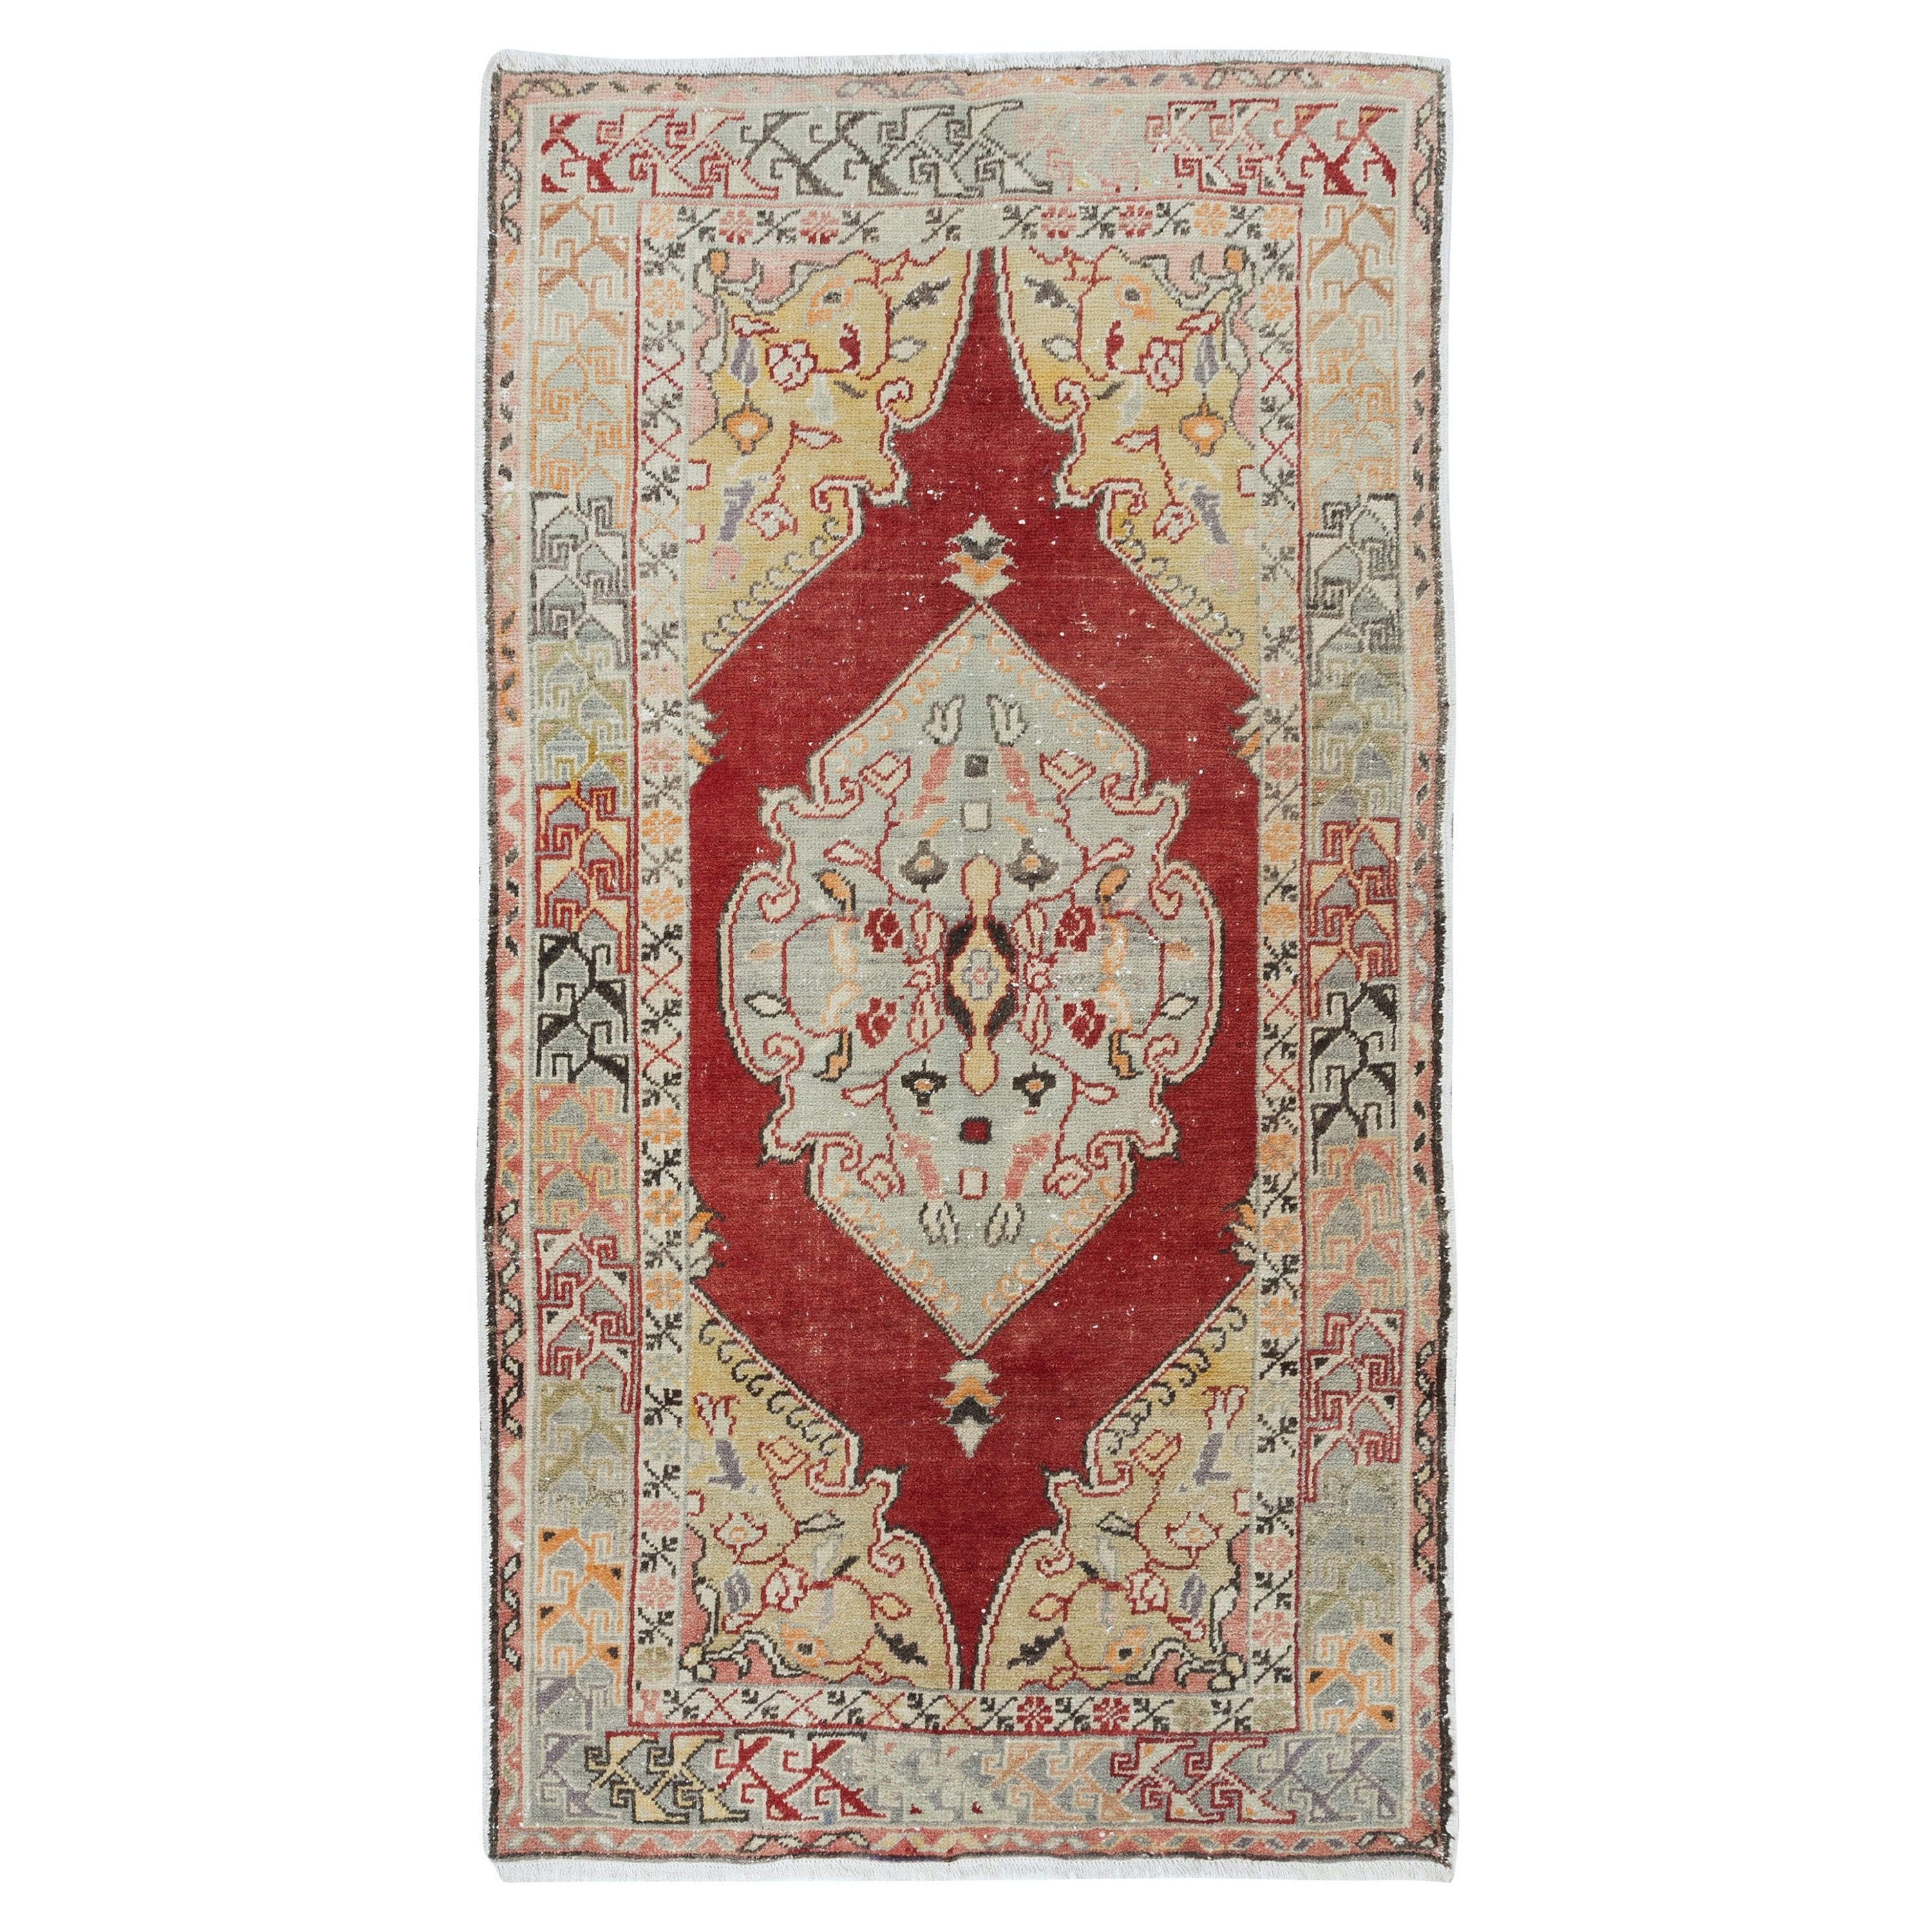 3.5x6.4 Ft Traditional Vintage Turkish Tribal Rug, Handmade Wool Village Carpet (Tapis de village en laine)